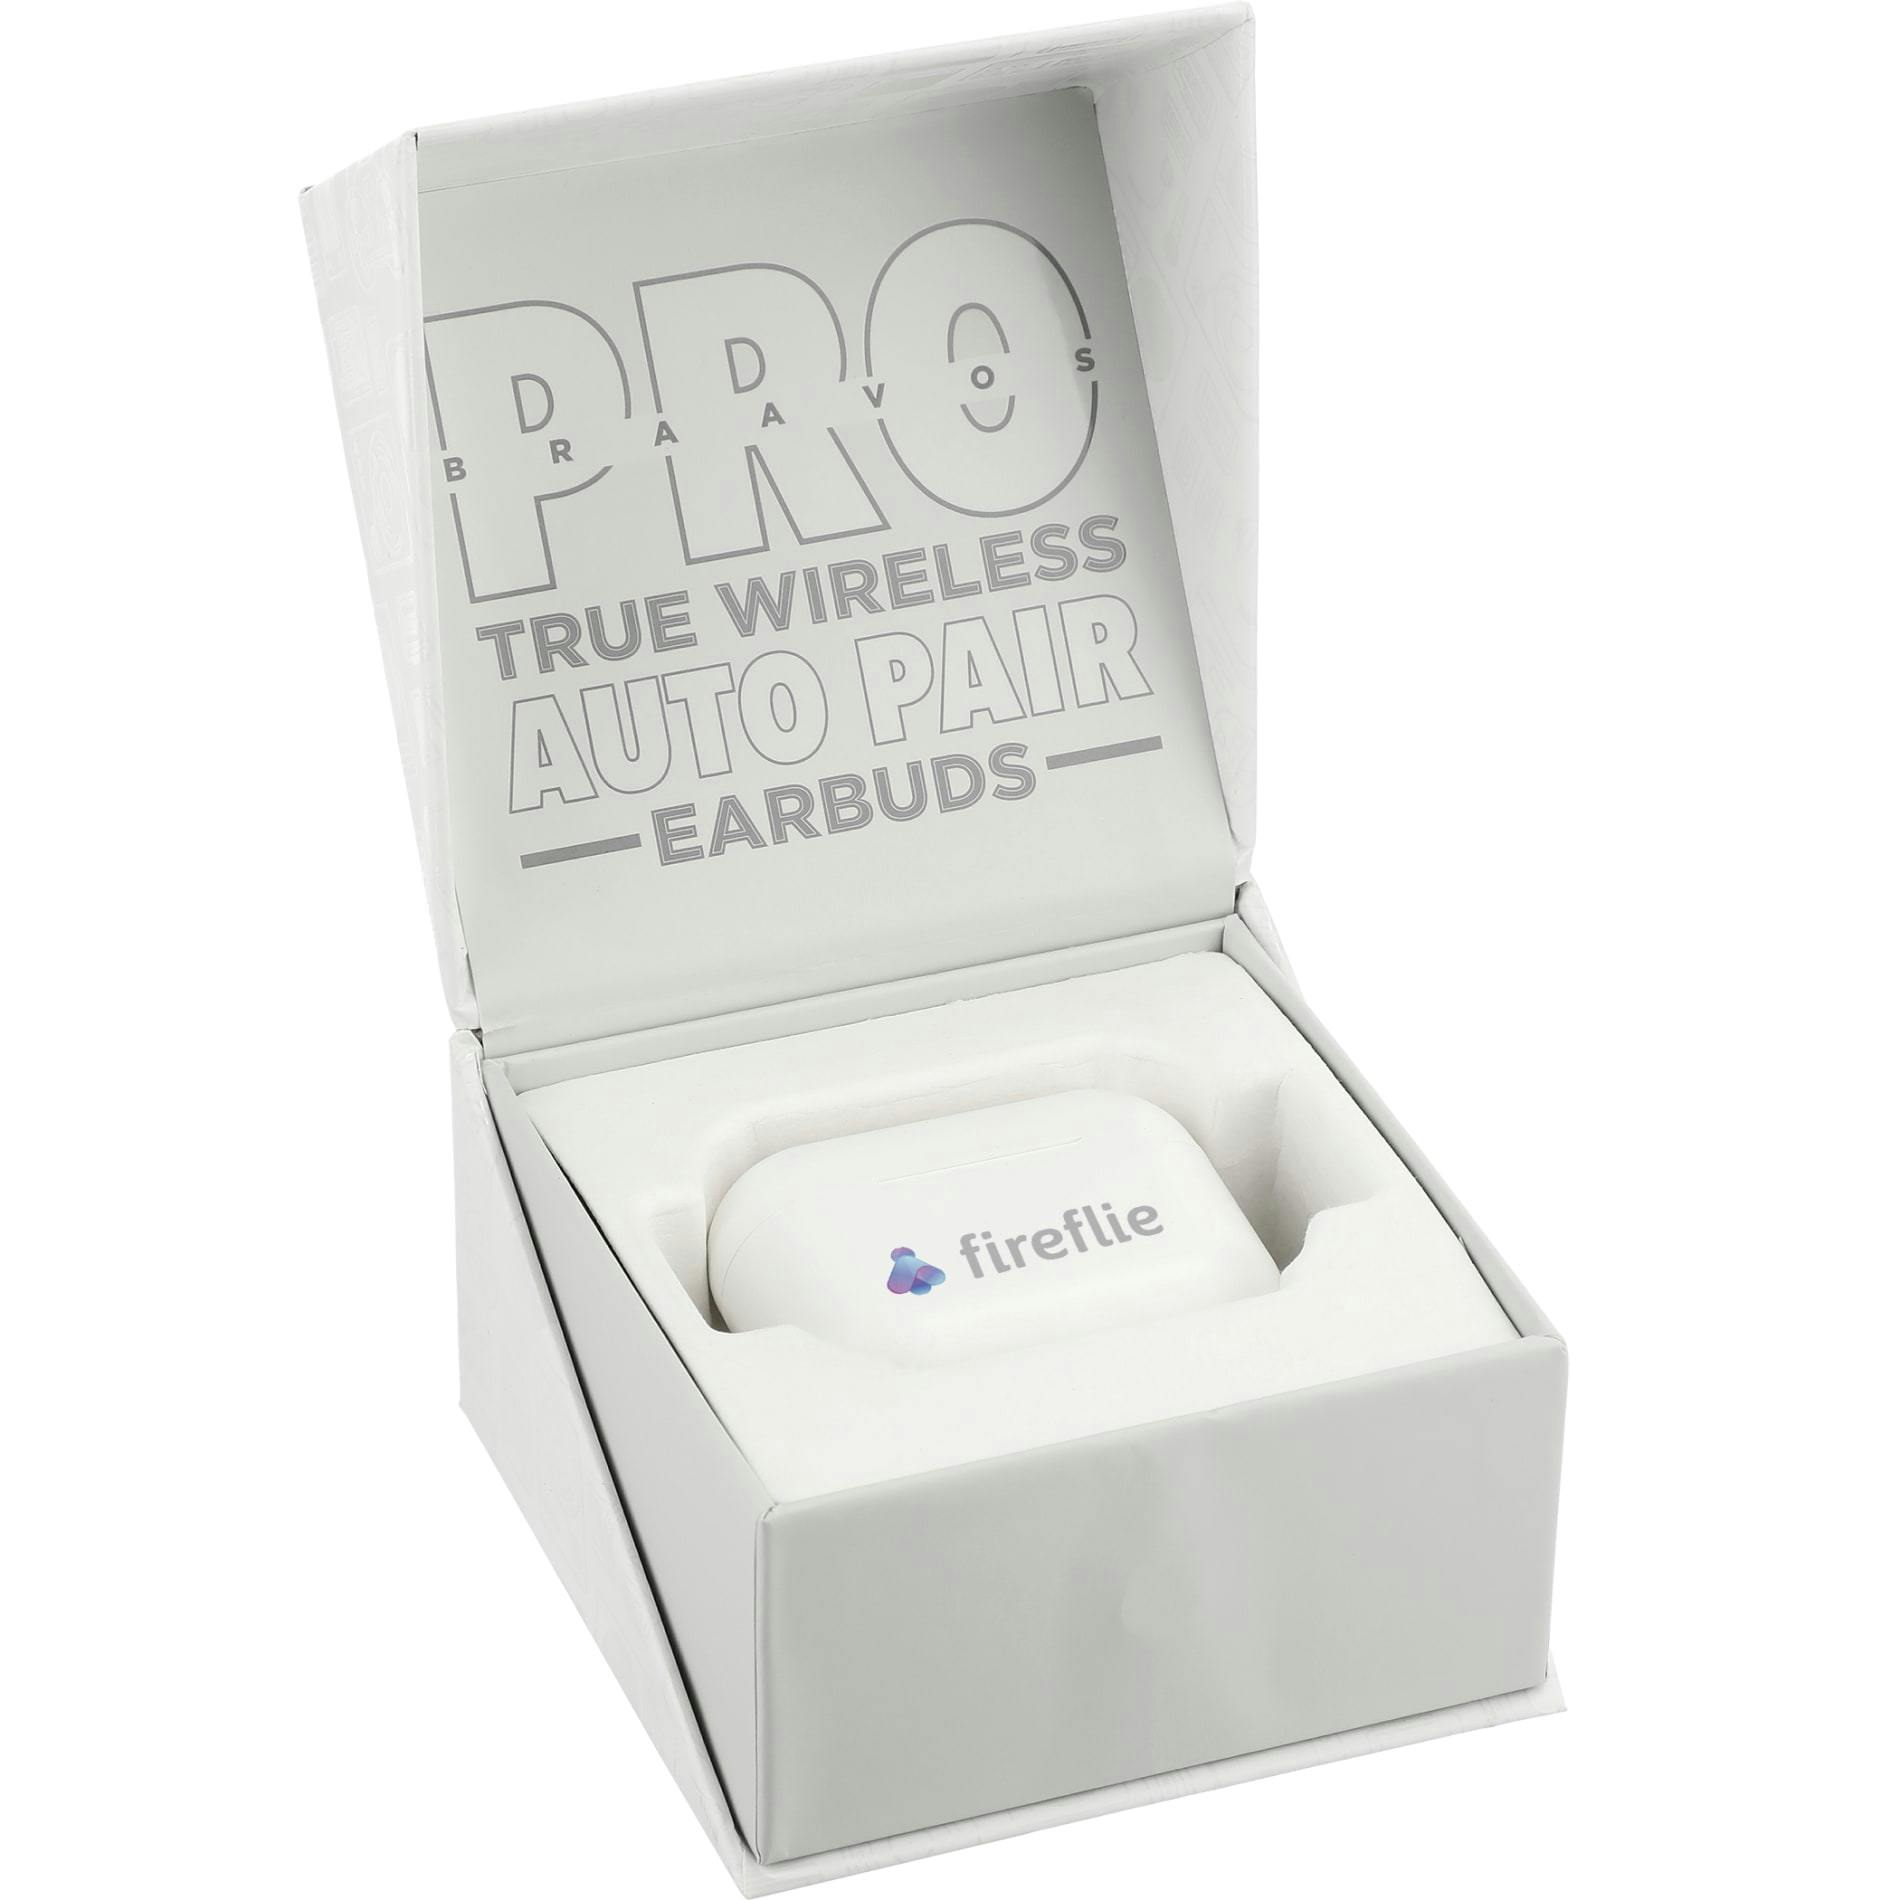 Braavos Pro True Wireless Auto Pair Earbuds - additional Image 7